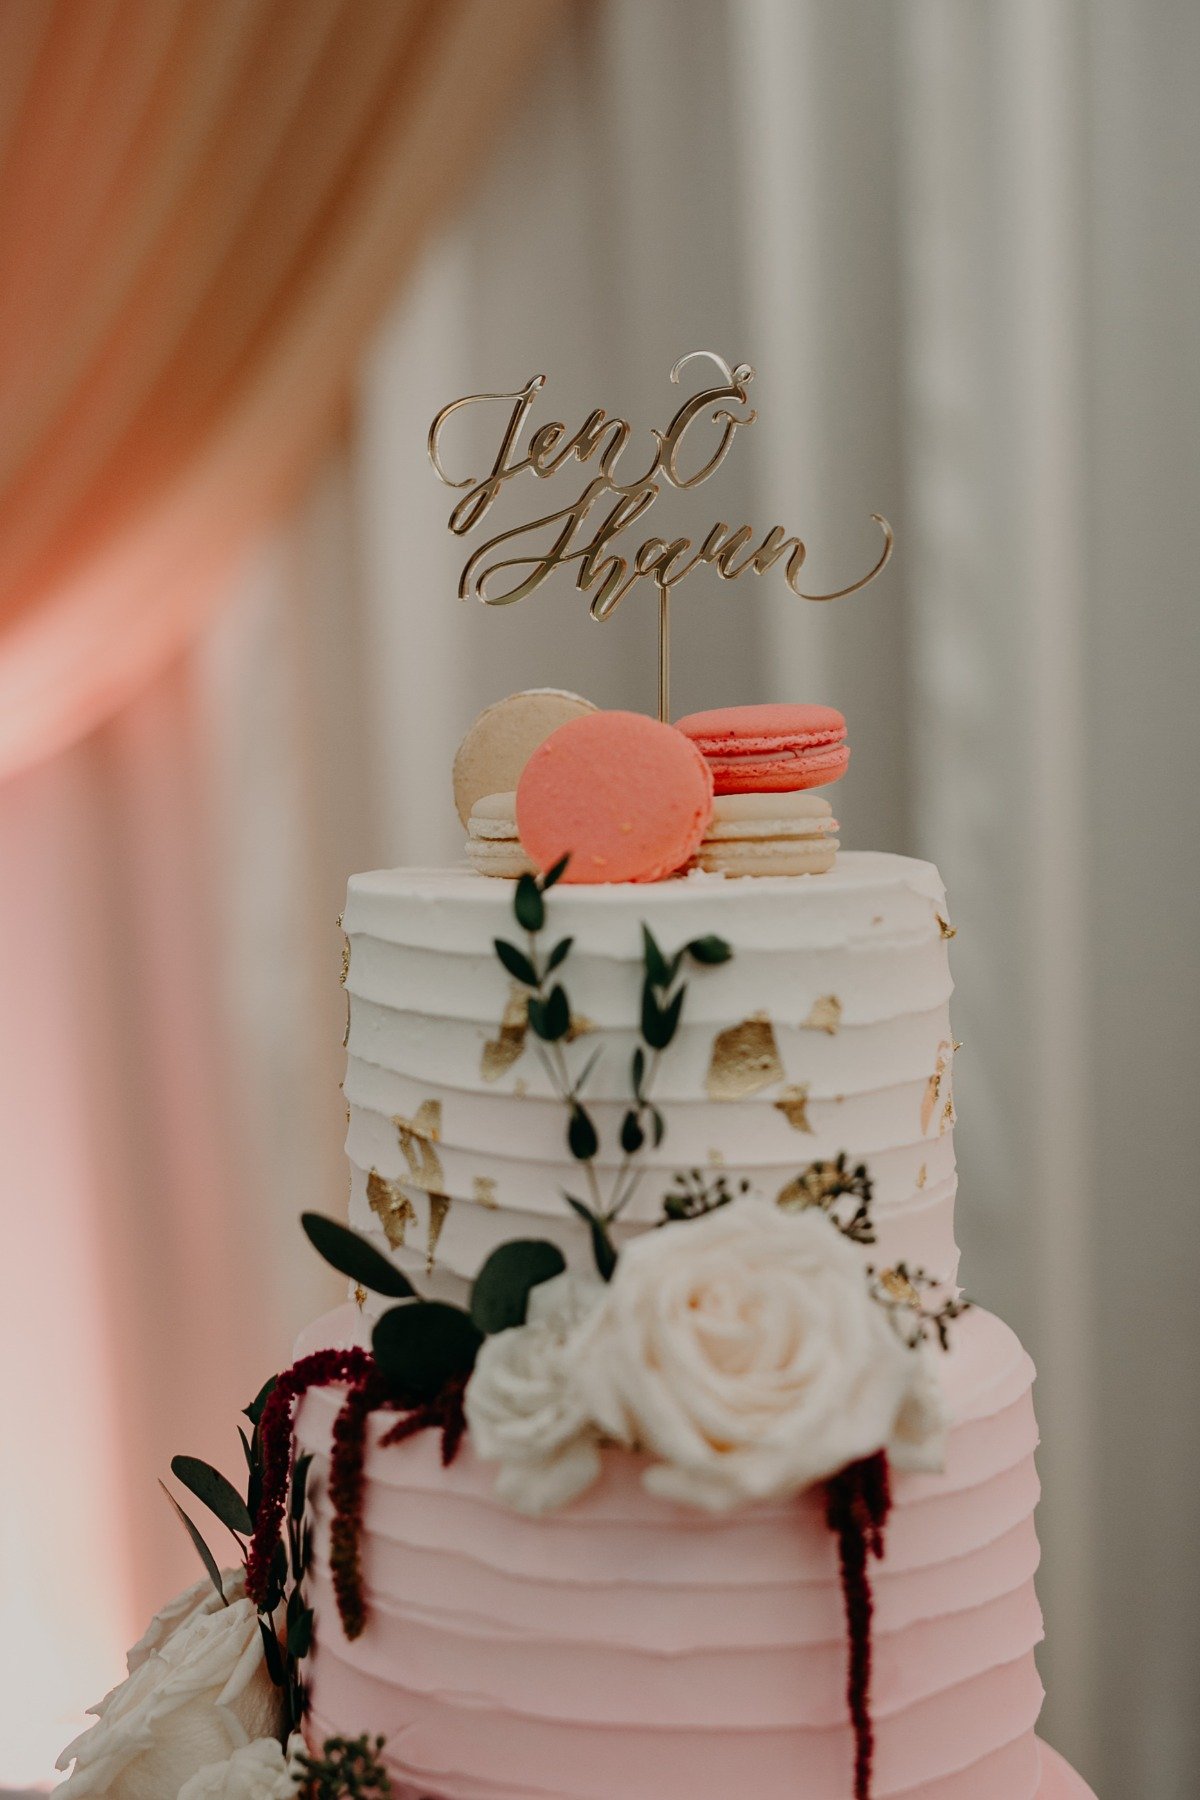 macaron topped wedding cake